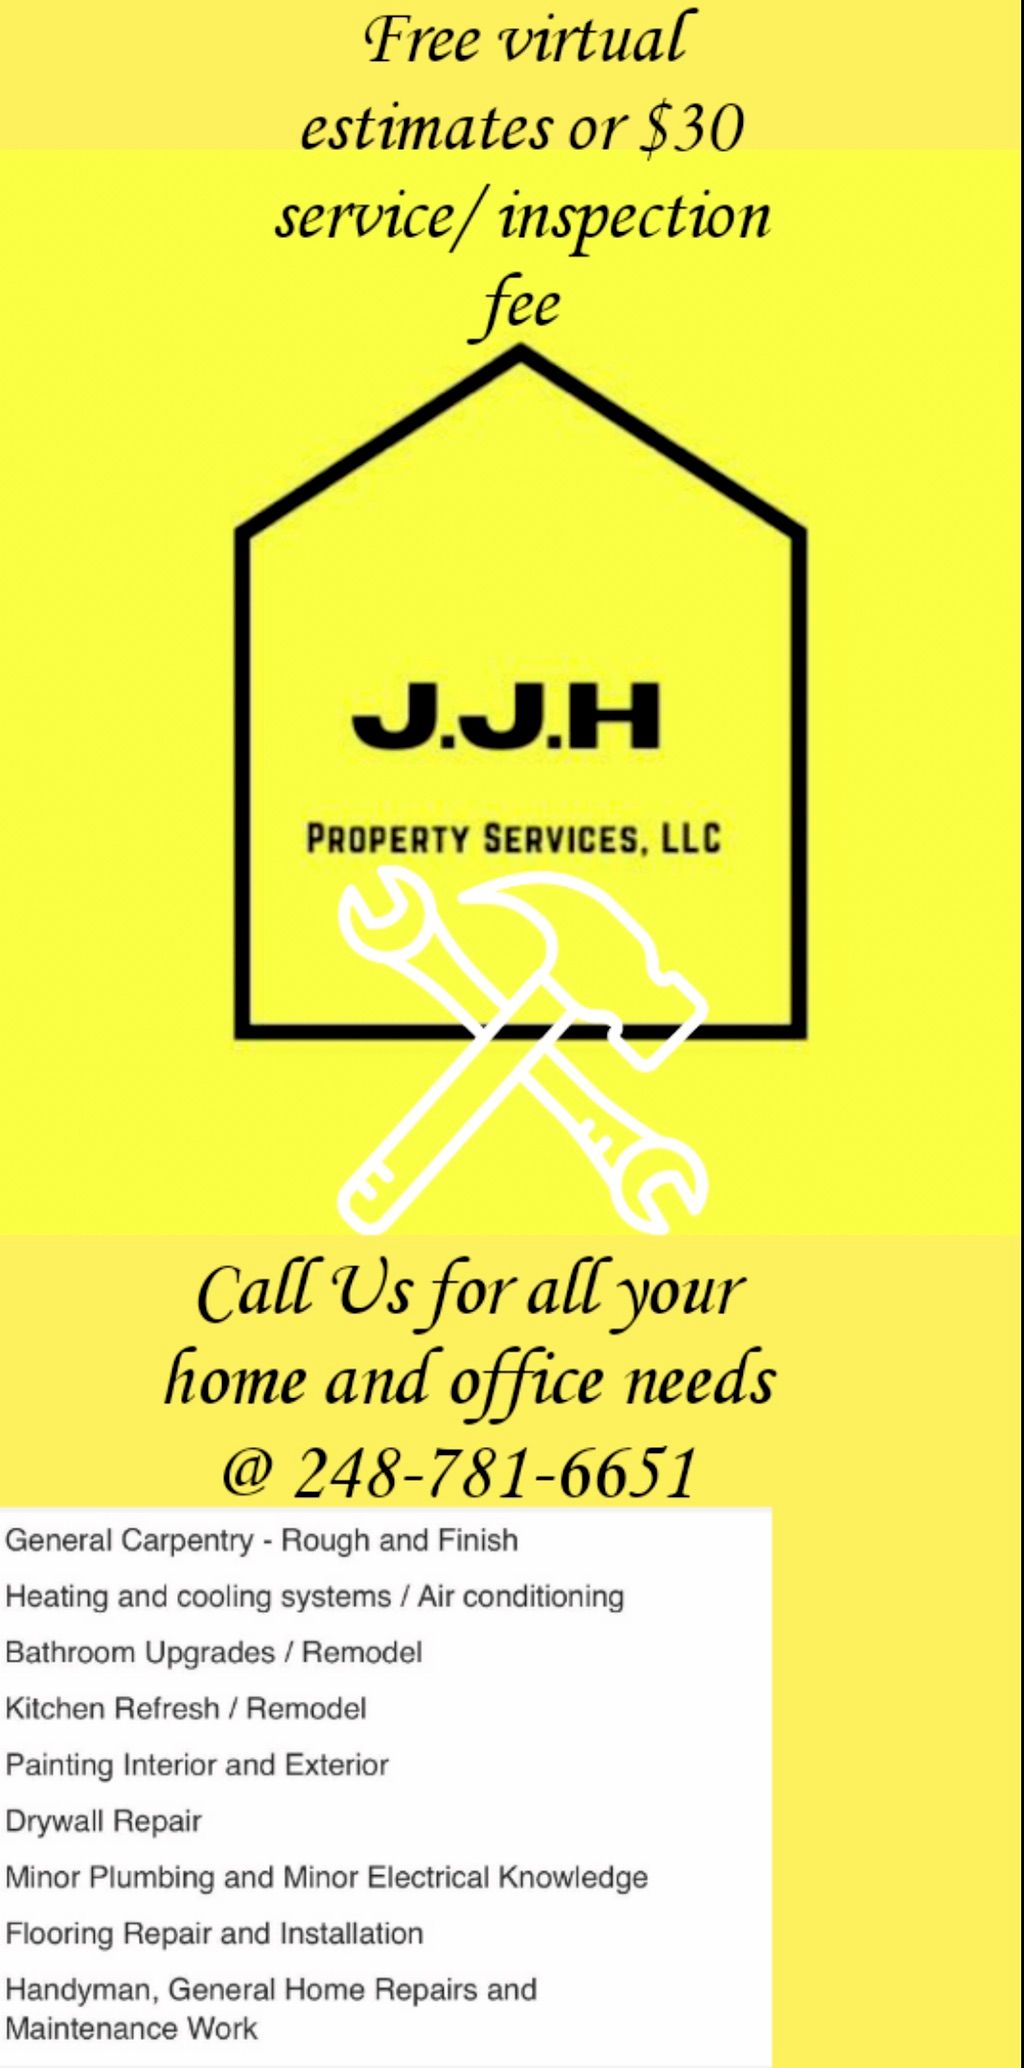 J.J.H Property Services LLC